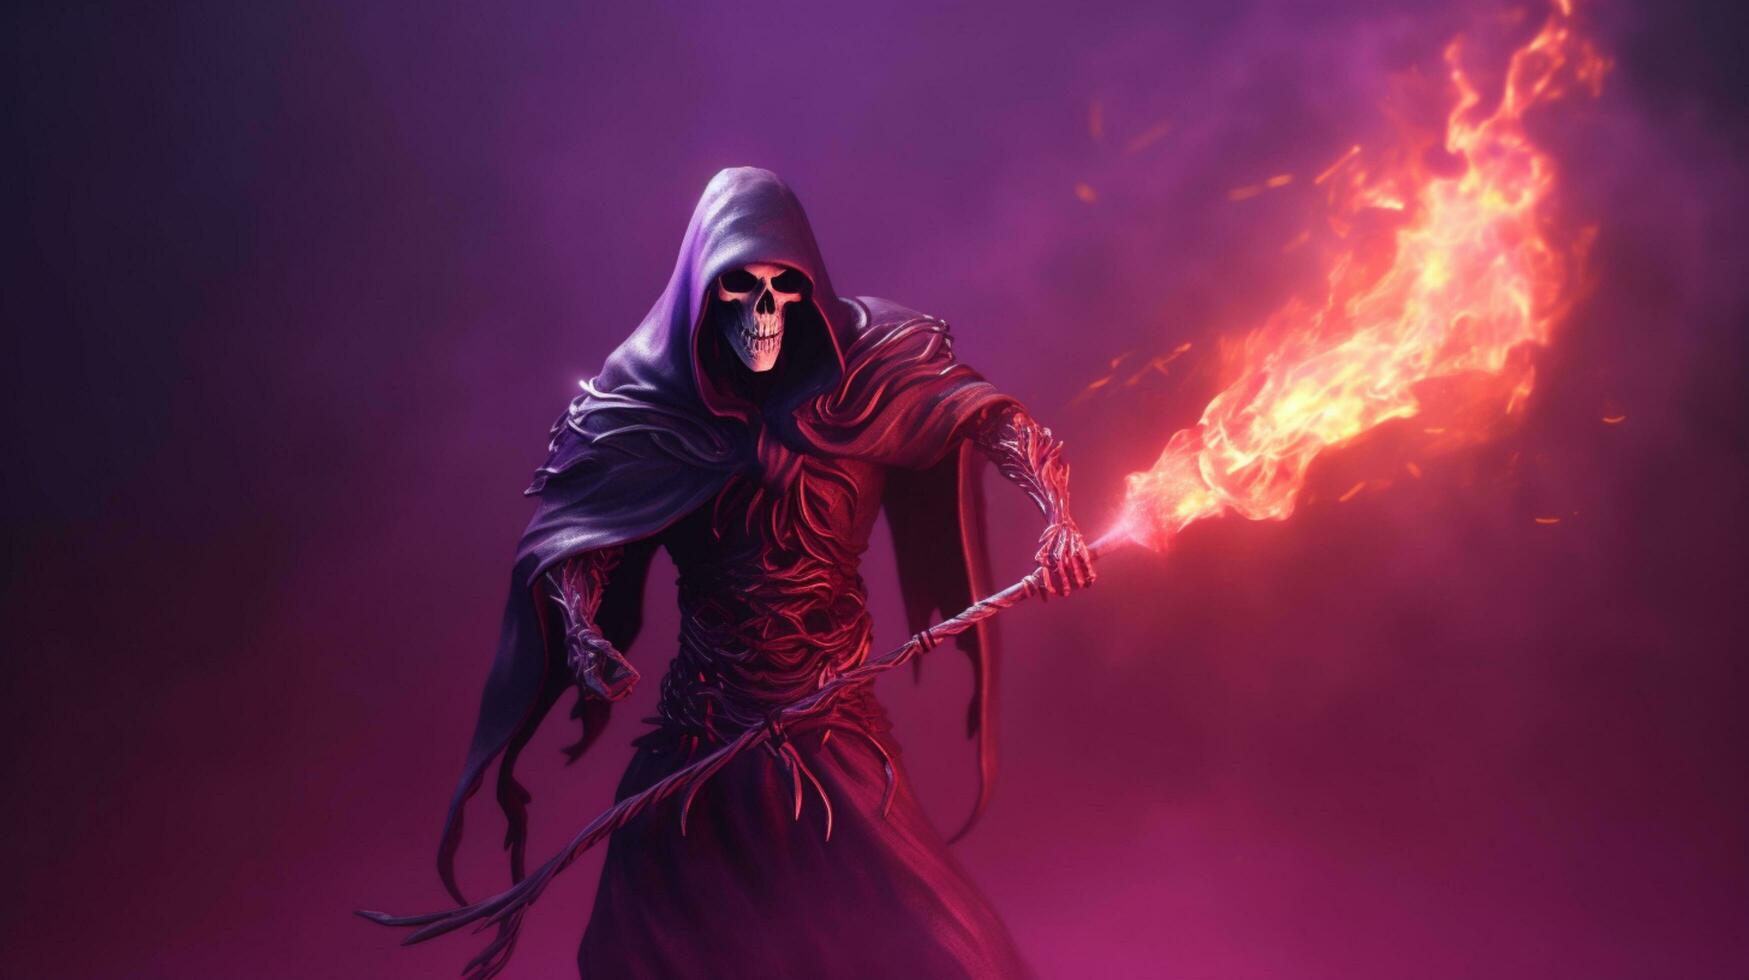 grim reaper with fire design purple color illustration photo